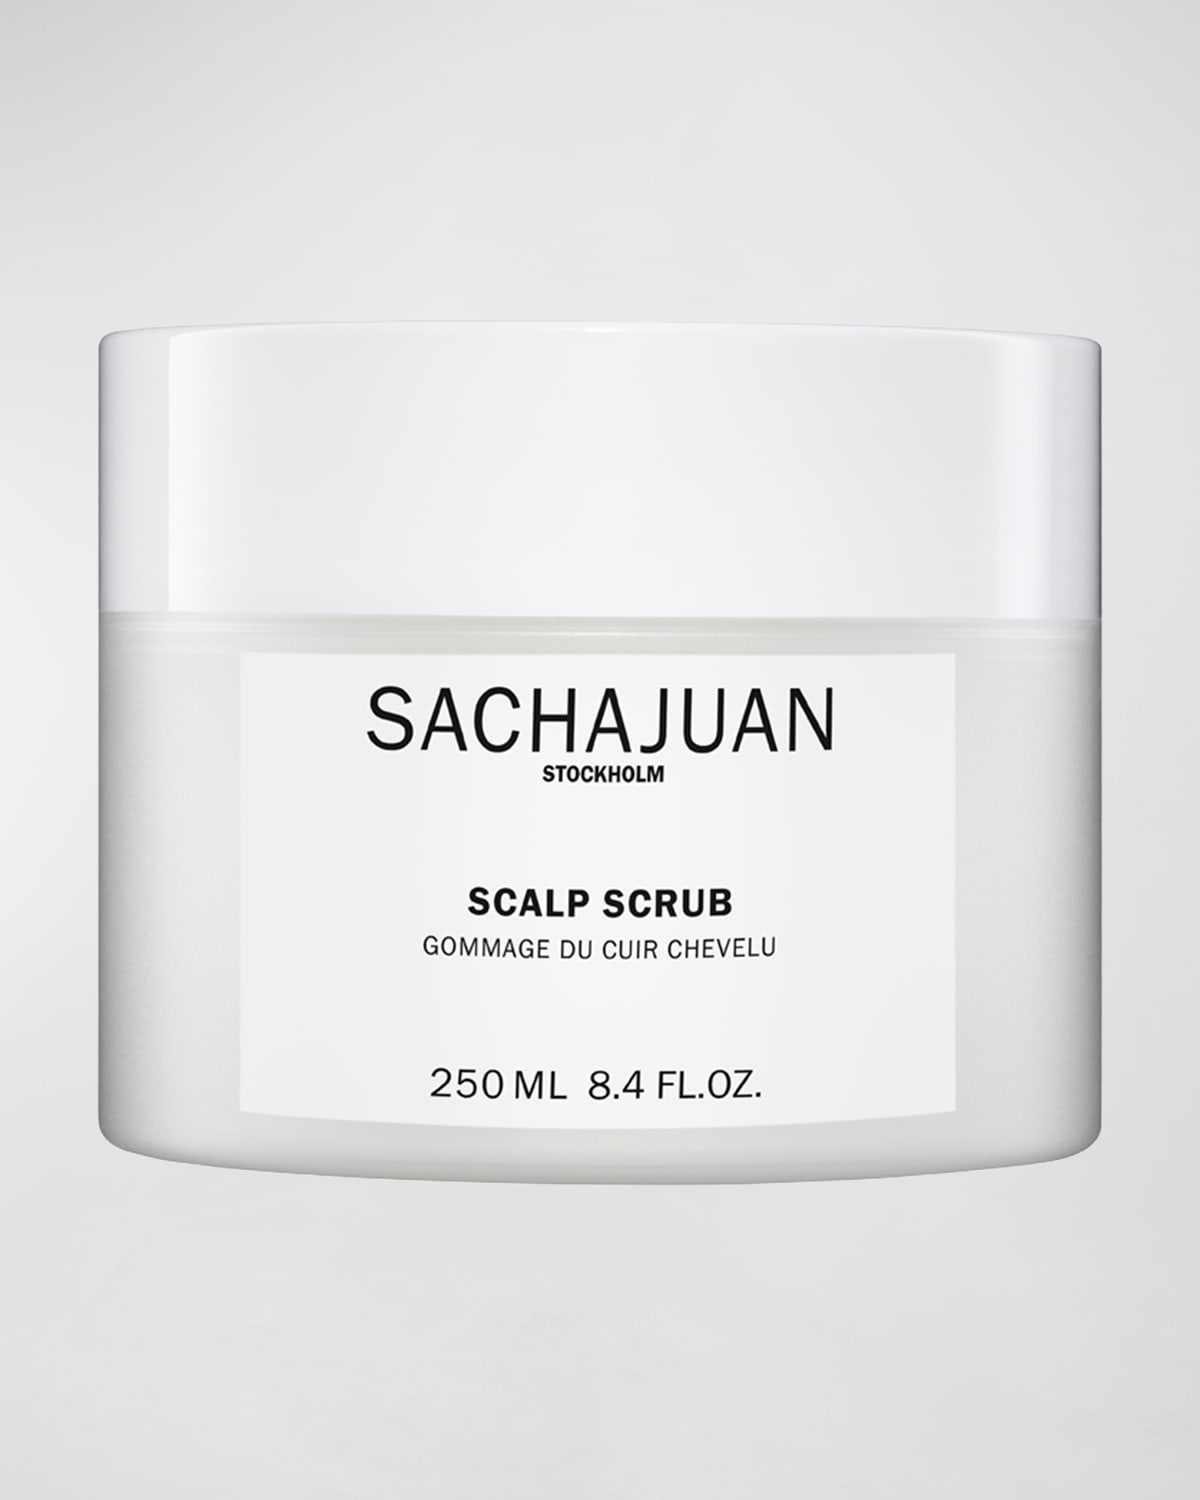 8.4 oz. Sachajuan Scalp Scrub